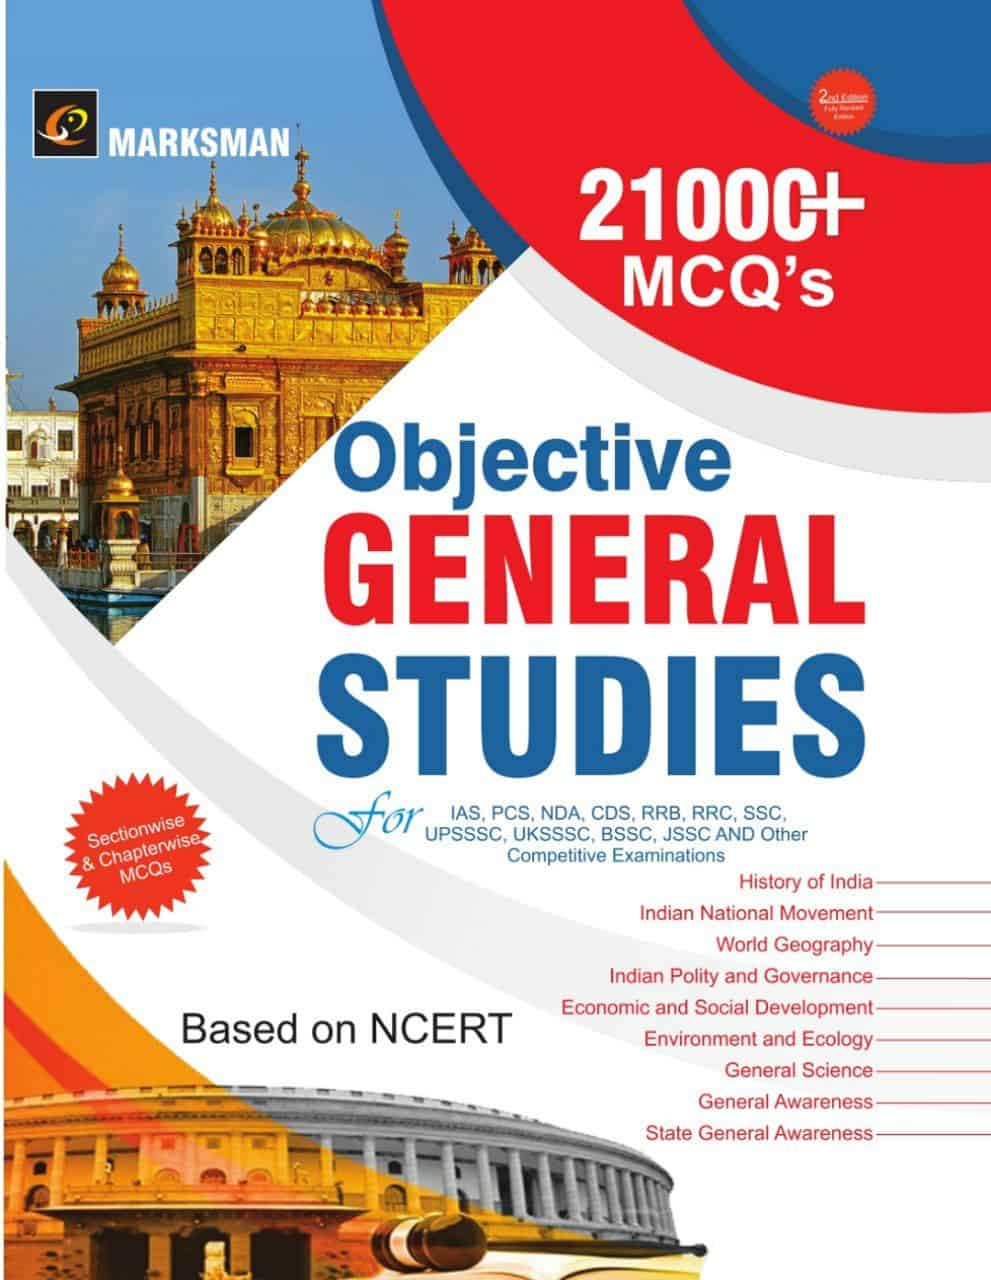 Marksman 21000+ Objective General Studies Pdf